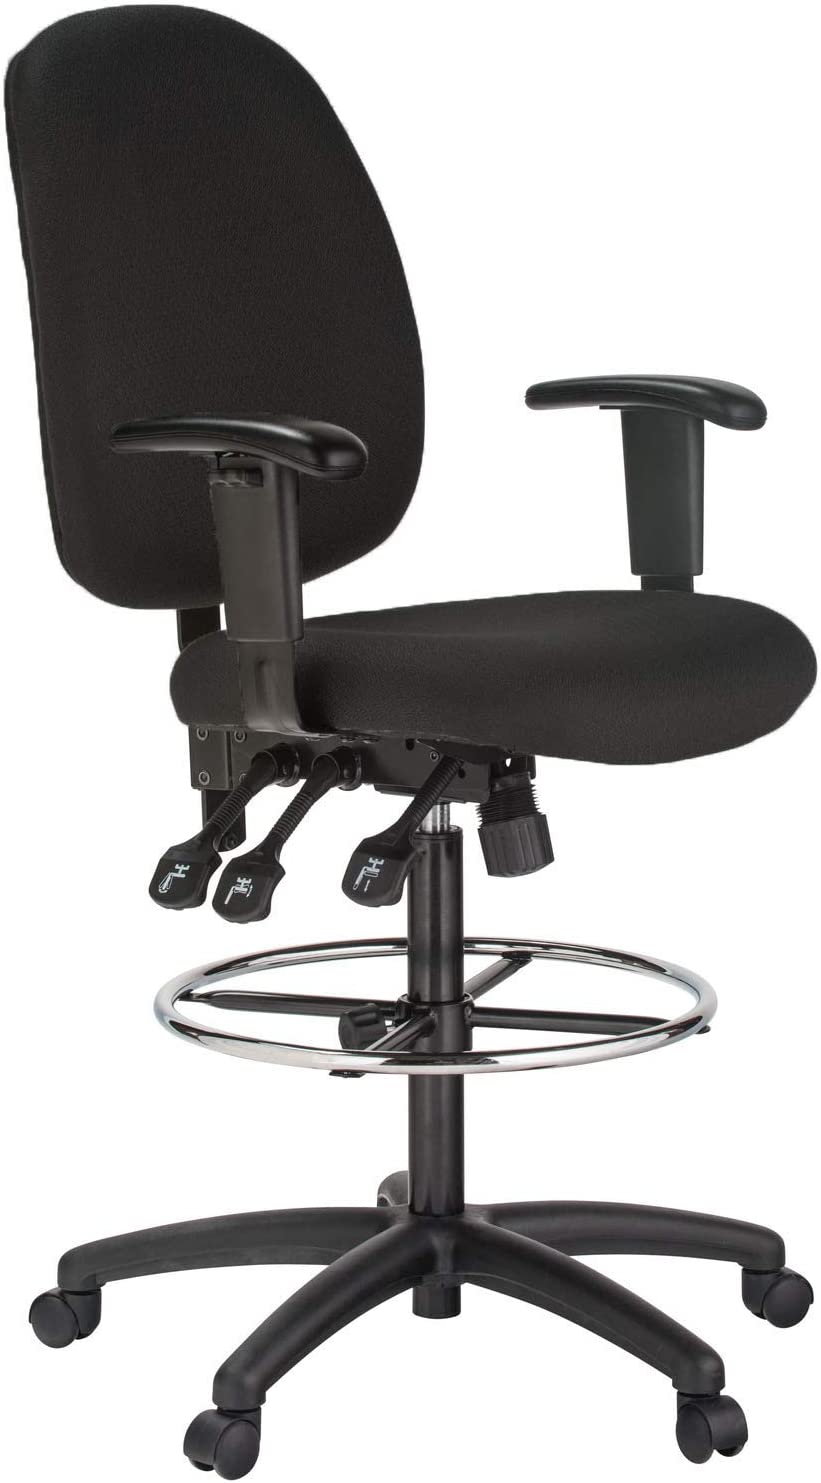 Harwick Extra Tall Ergonomic Drafting Chair - Black Leather